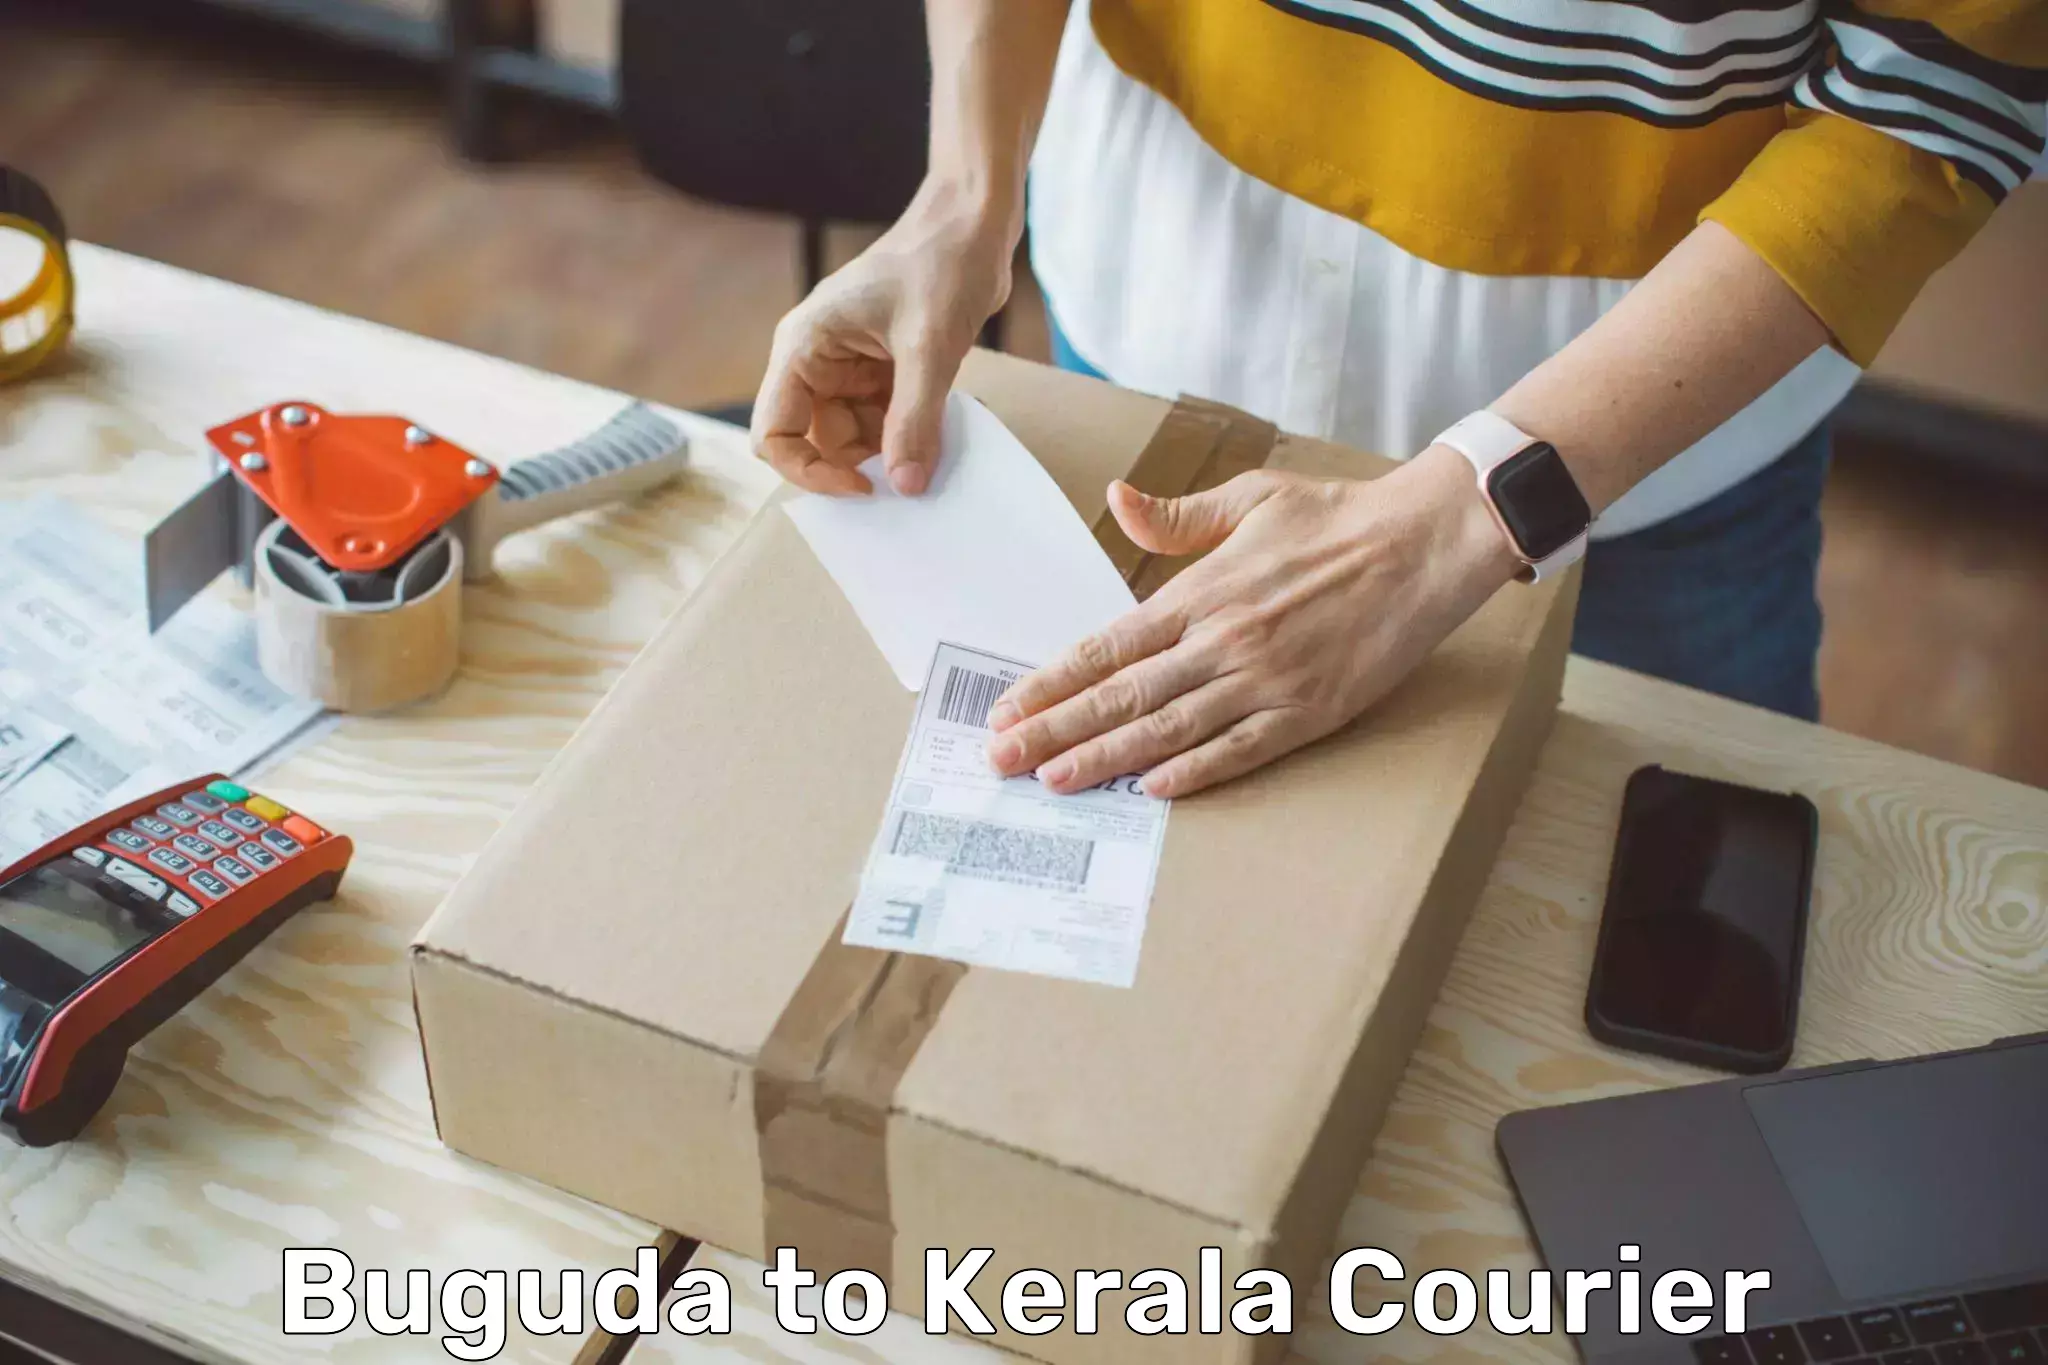 Easy return solutions Buguda to Kerala